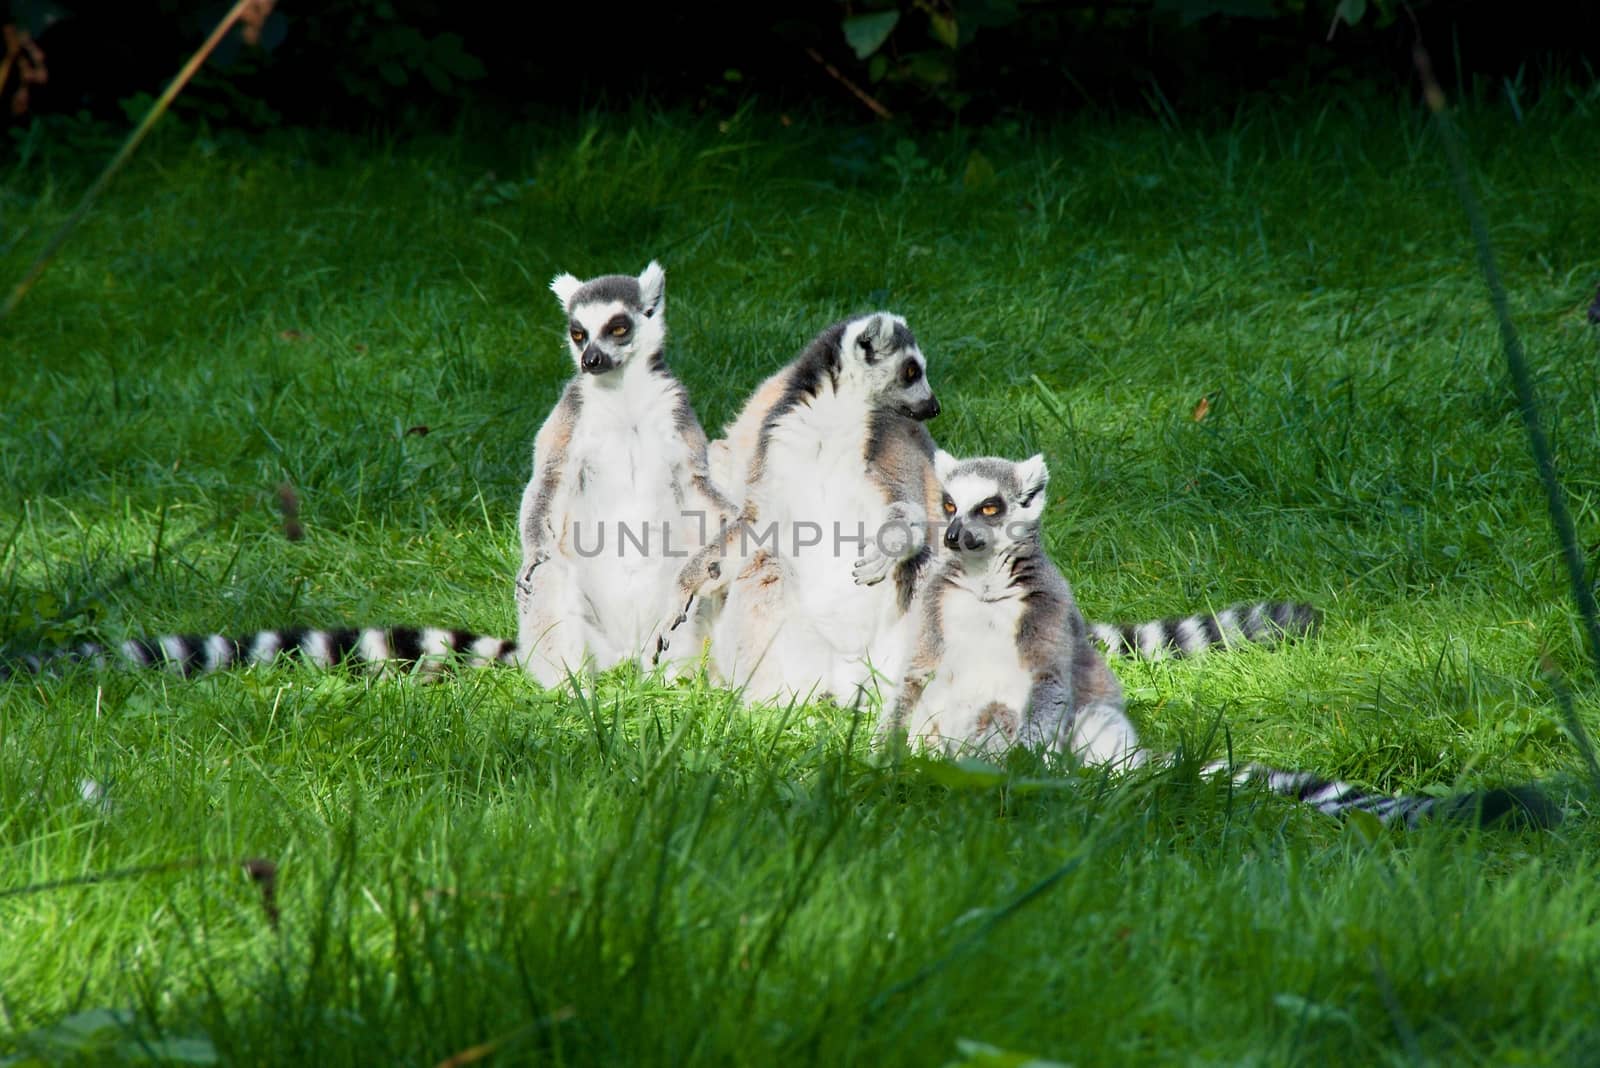 Lemur family by Dermot68